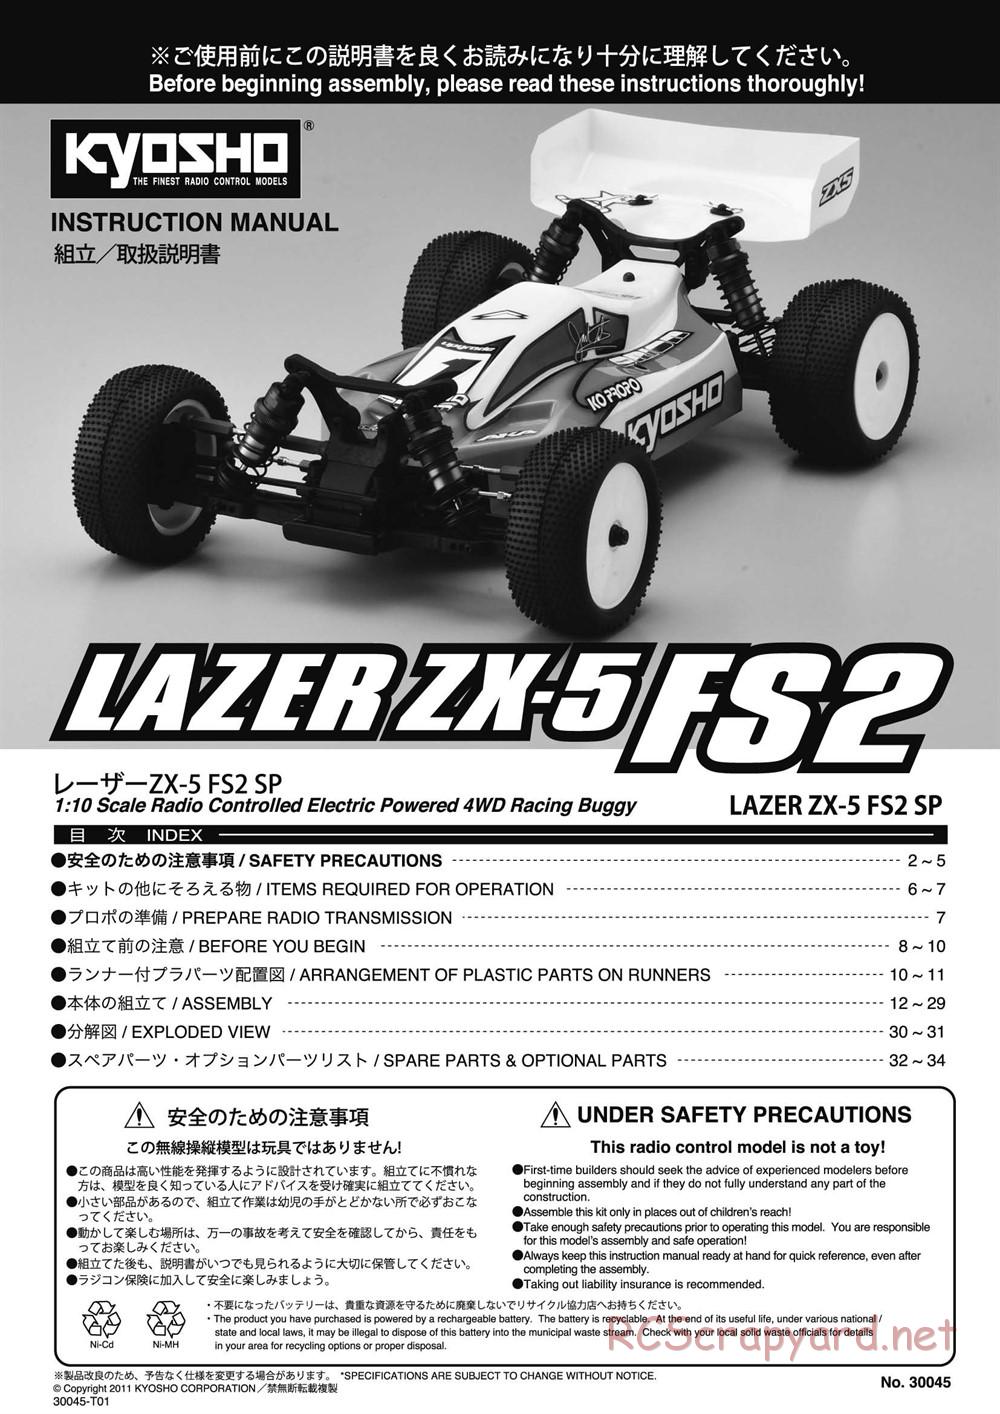 Kyosho - Lazer ZX-5 FS2 SP - Manual - Page 1